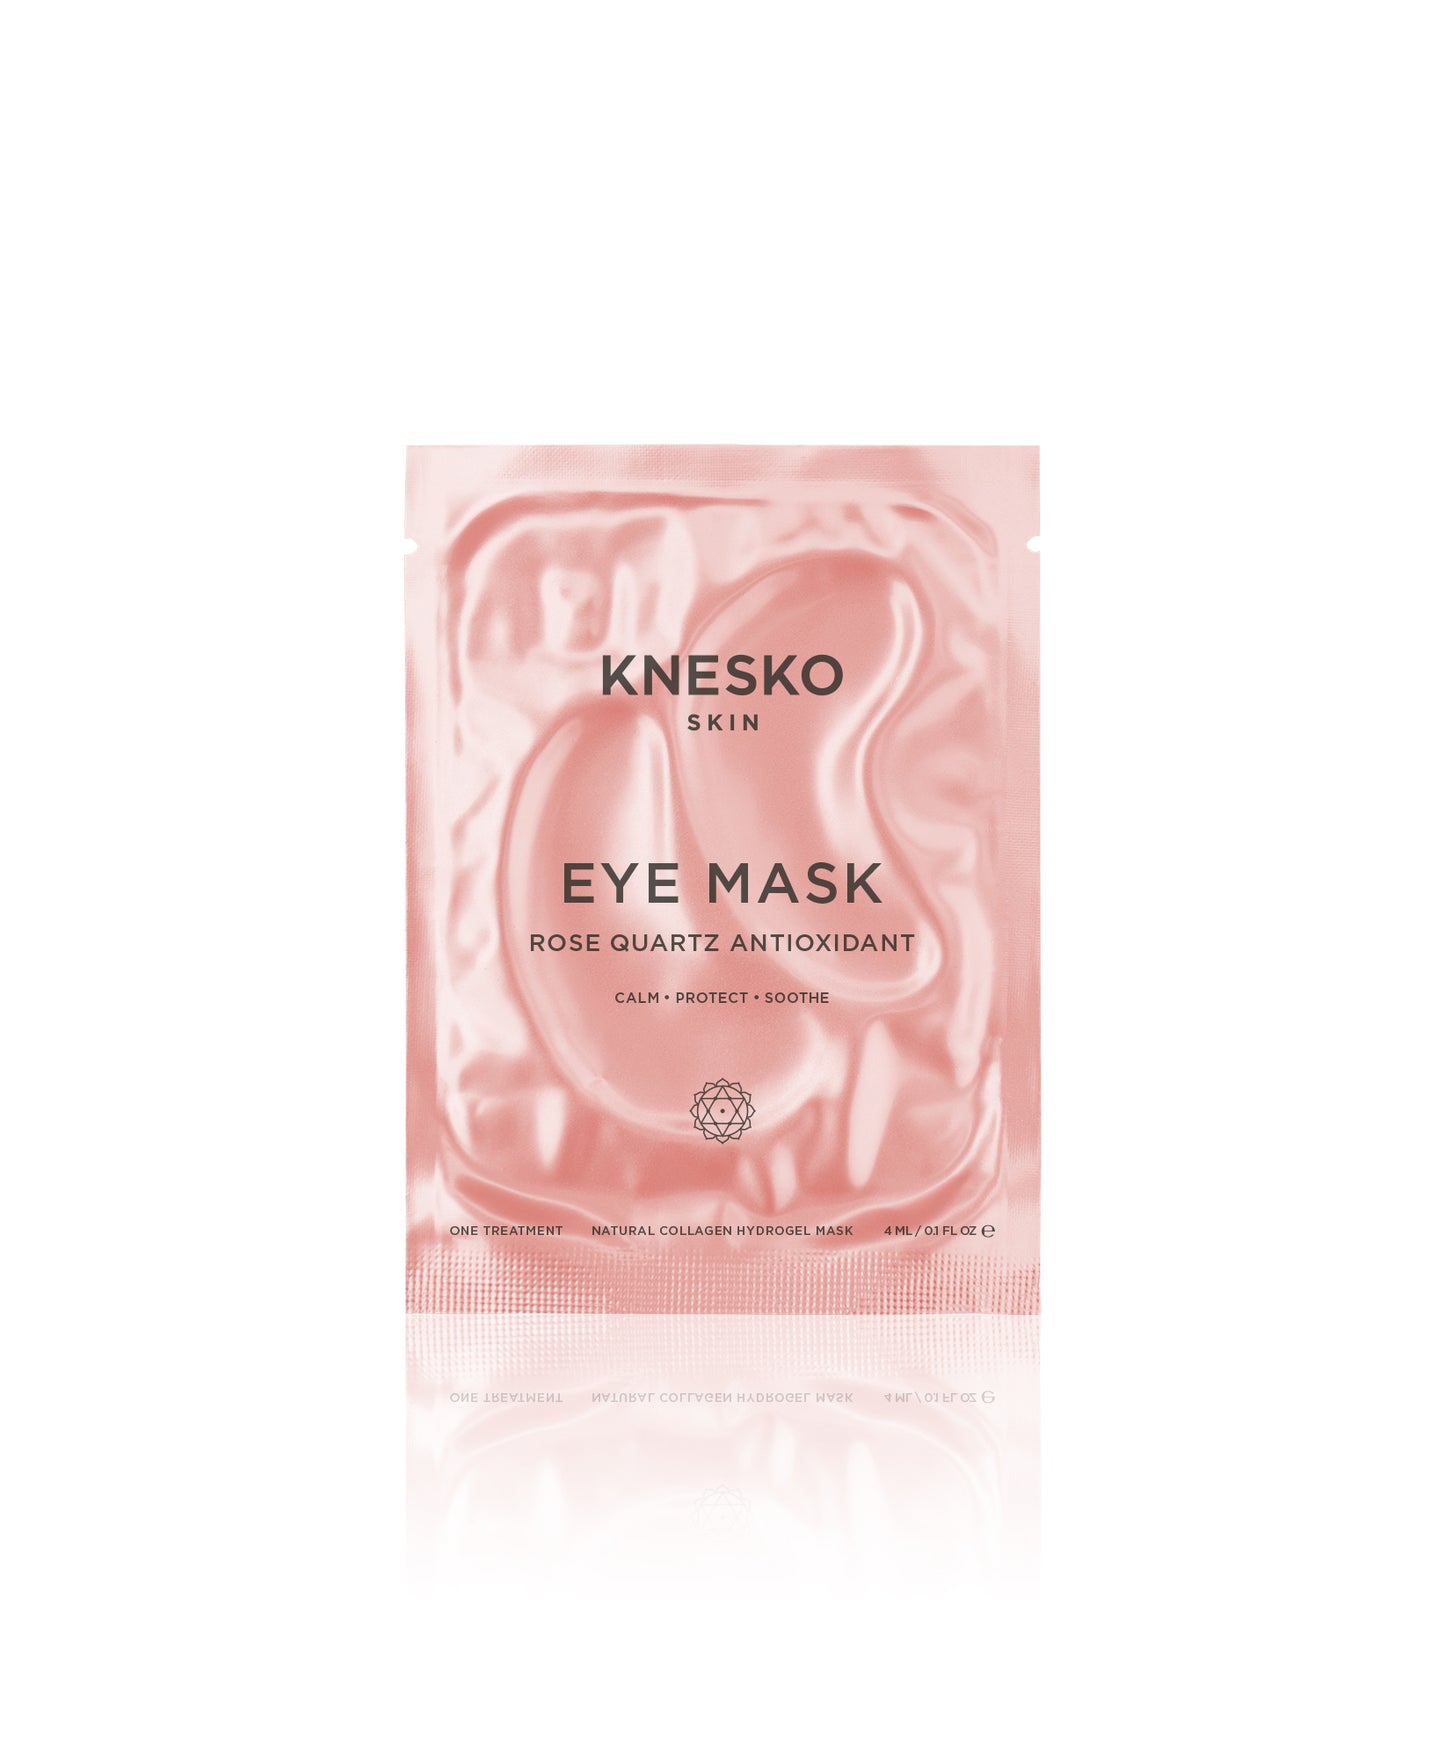 Rose Quartz Antioxidant Collagen Eye Mask packaging.